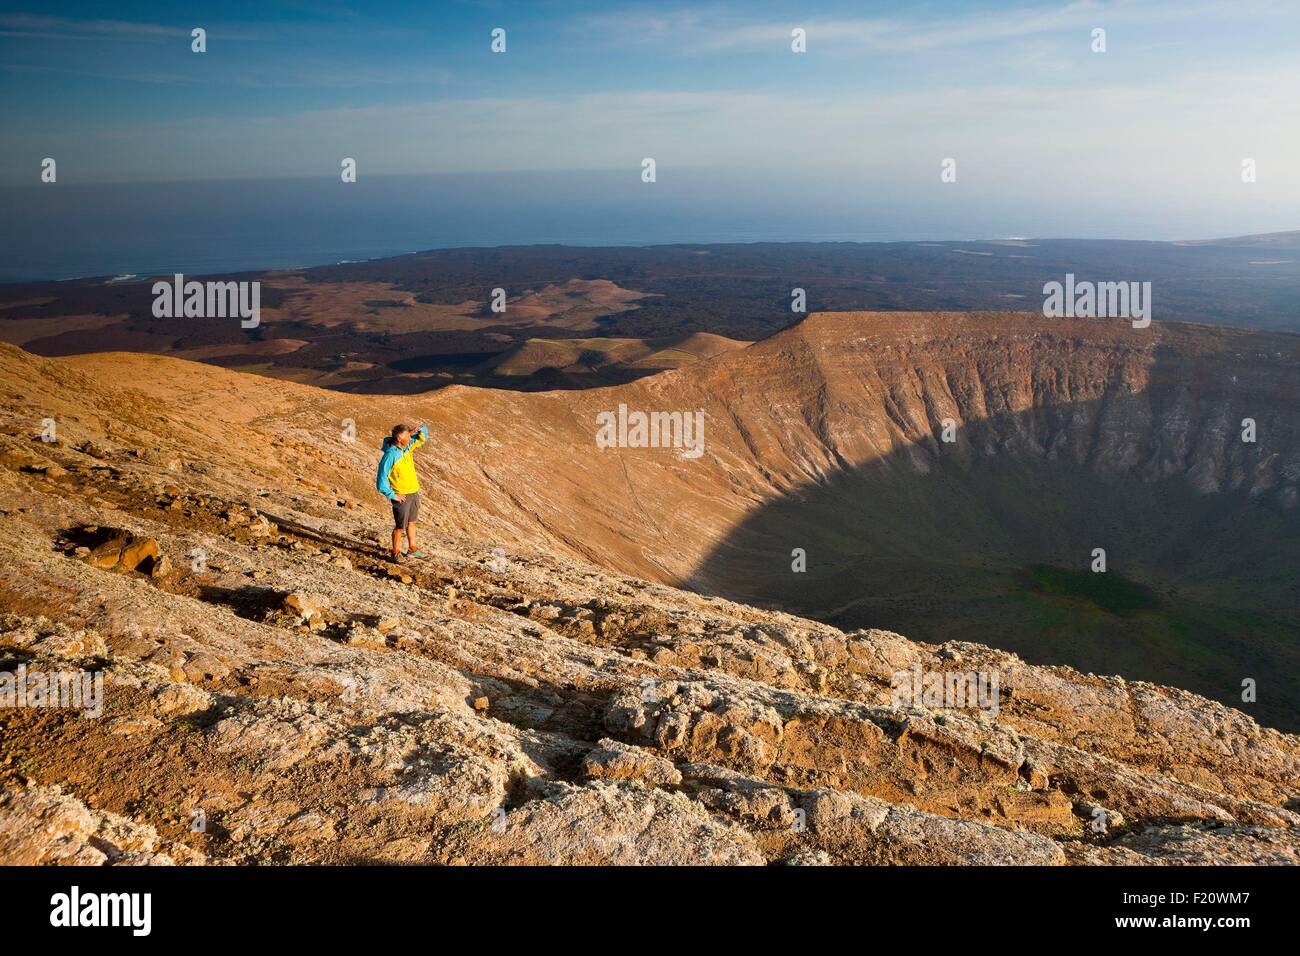 Spain, Canaries Islands, Lanzarote island, crater of the Caldera Blanca, man practising the hike Stock Photo